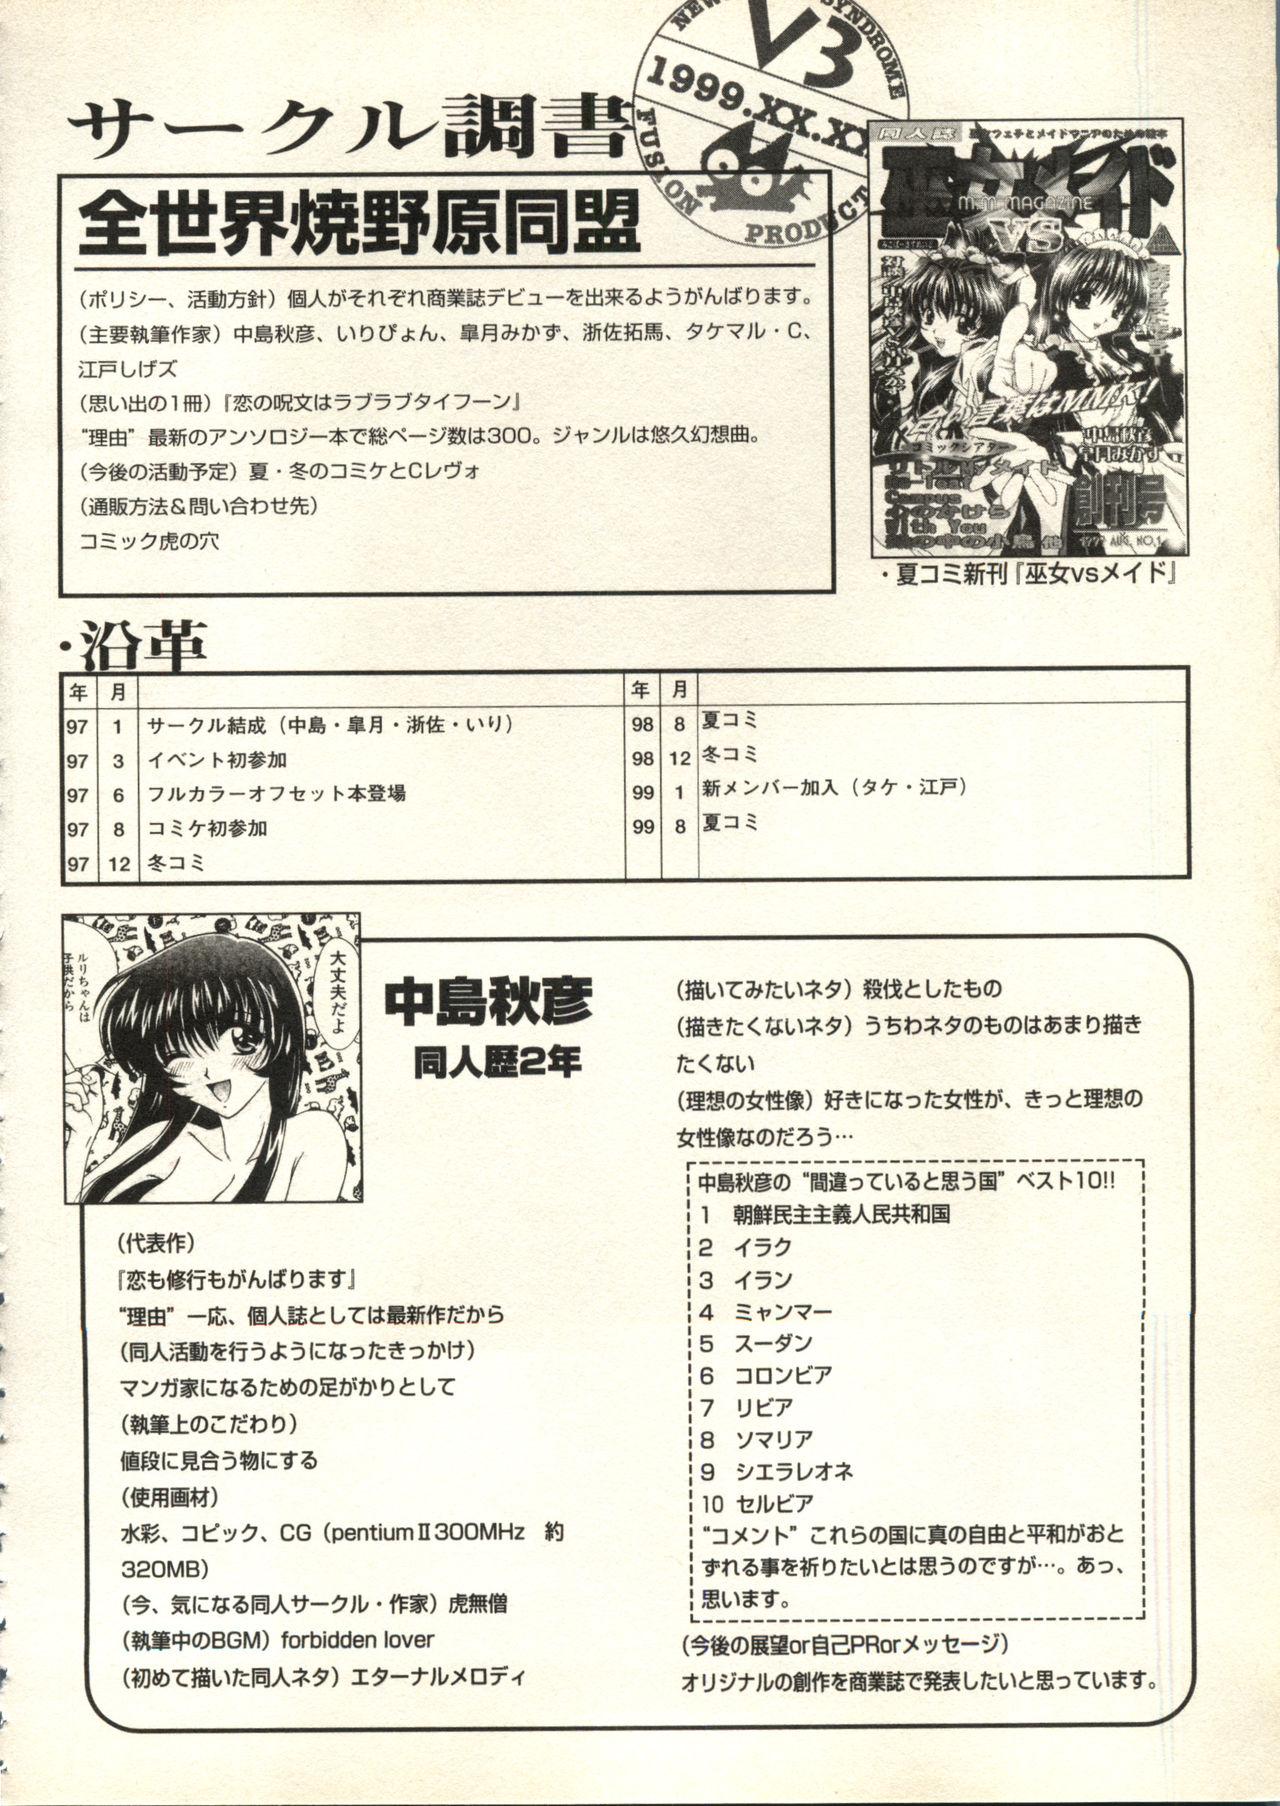 [Anthology] Bishoujo Shoukougun V3 (1) '99 Summer Edition (Various) 150